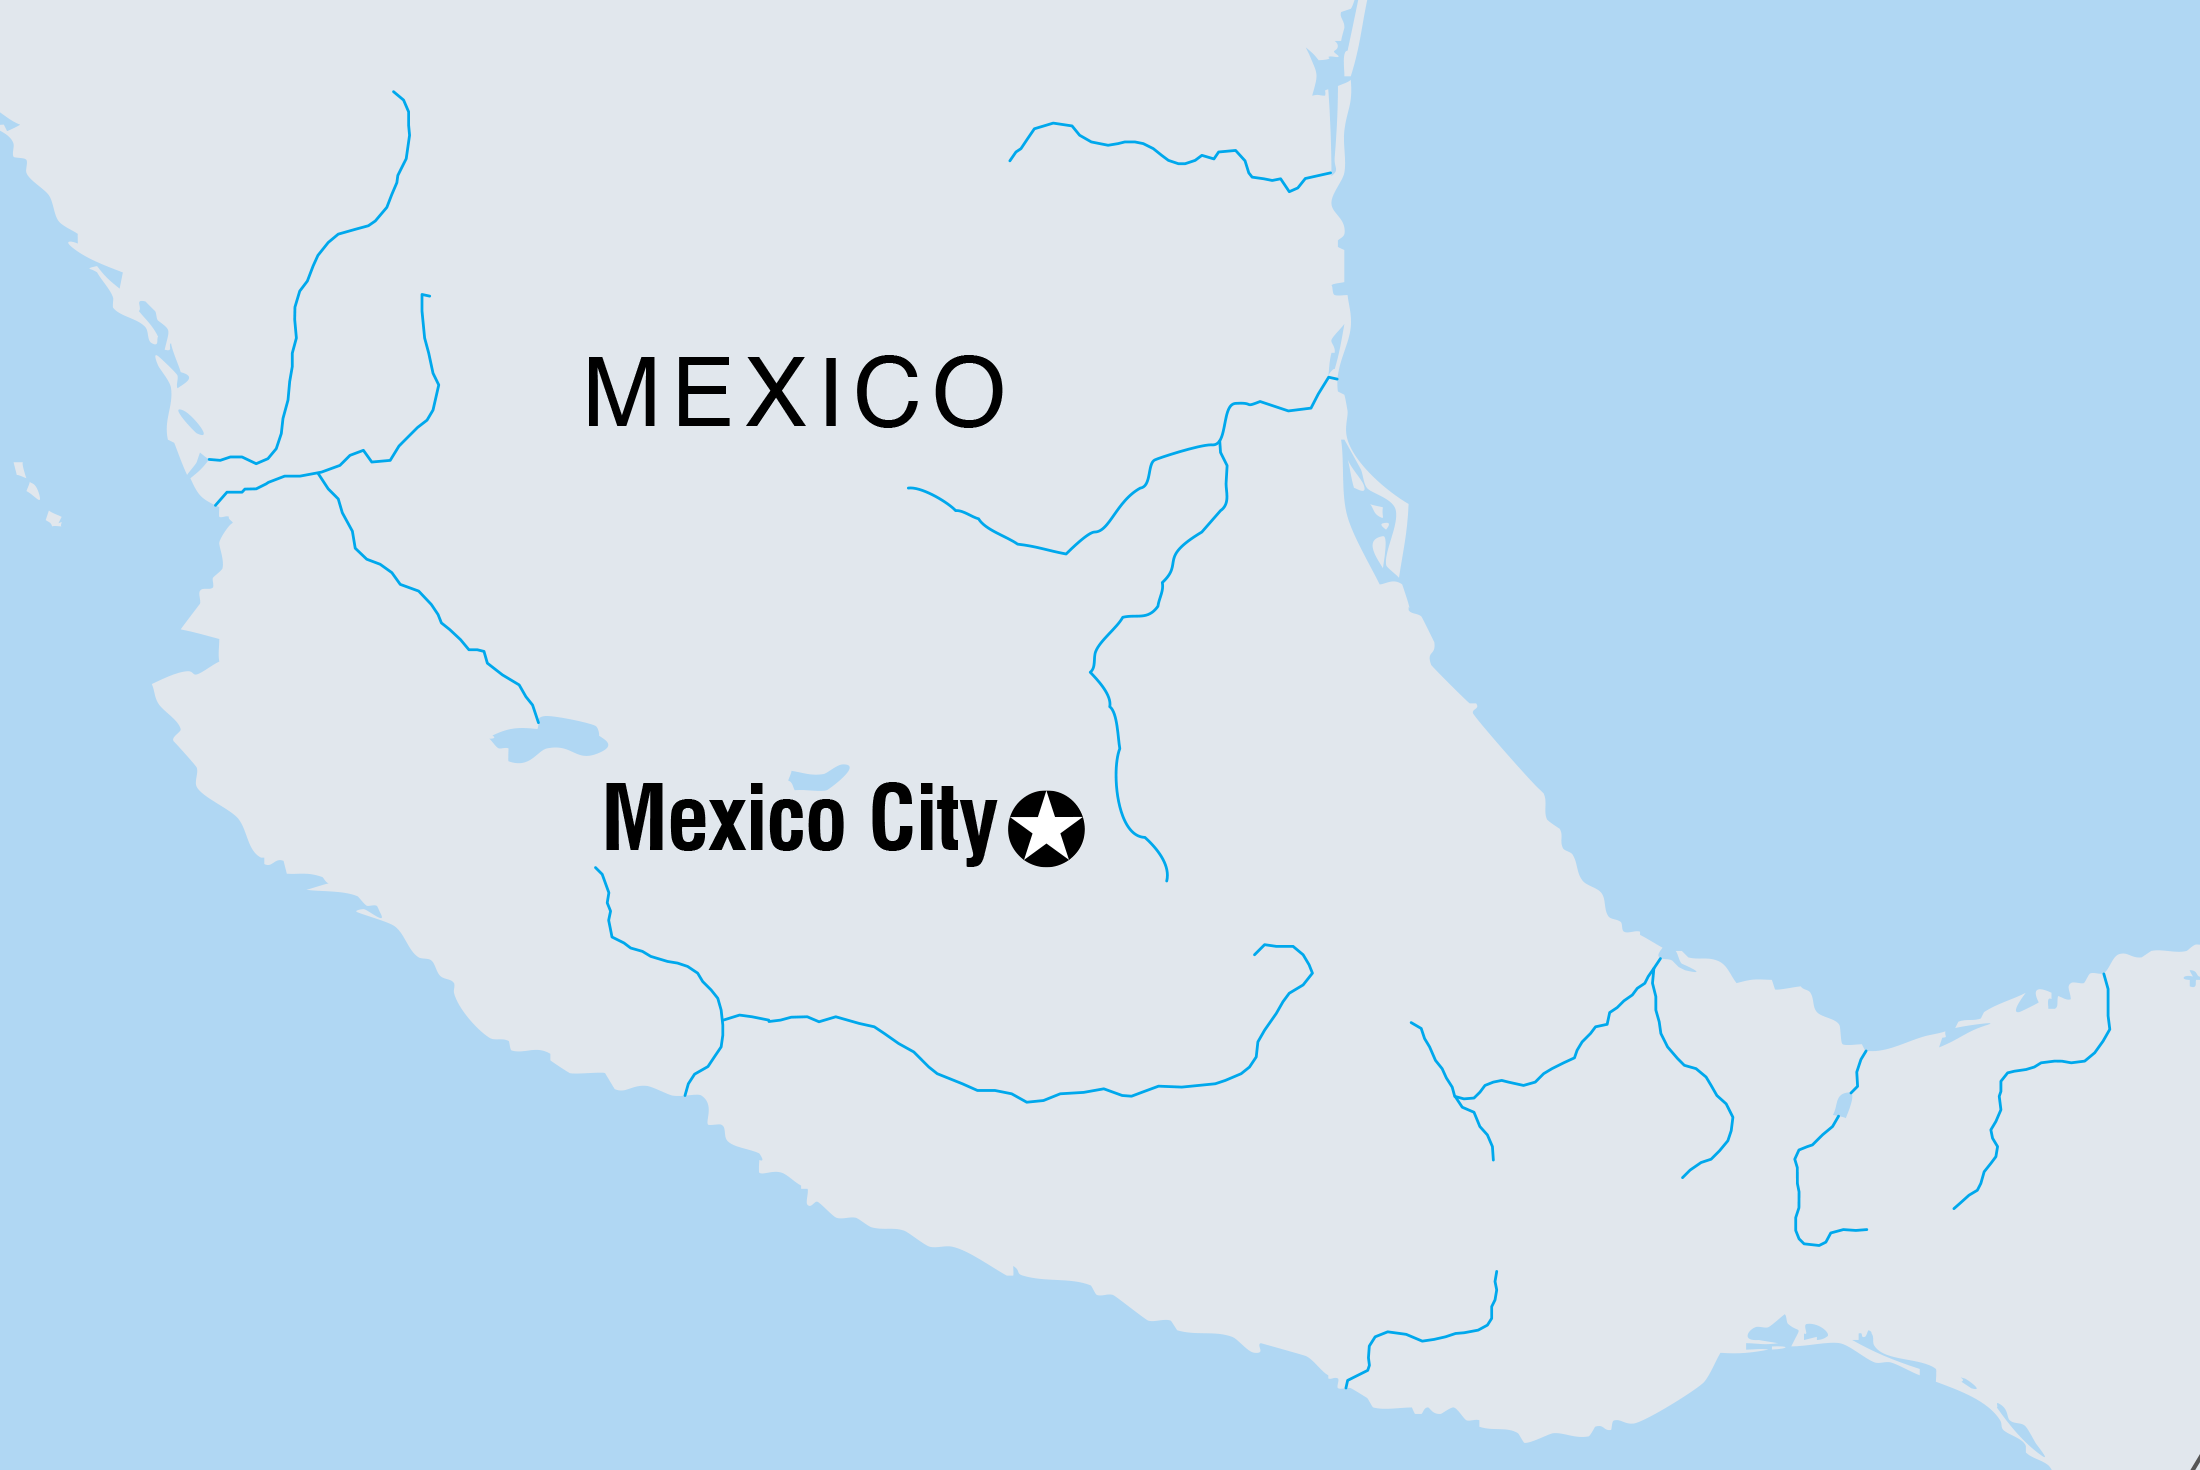 tourhub | Intrepid Travel | Mexico City: Day of the Dead Original | Tour Map